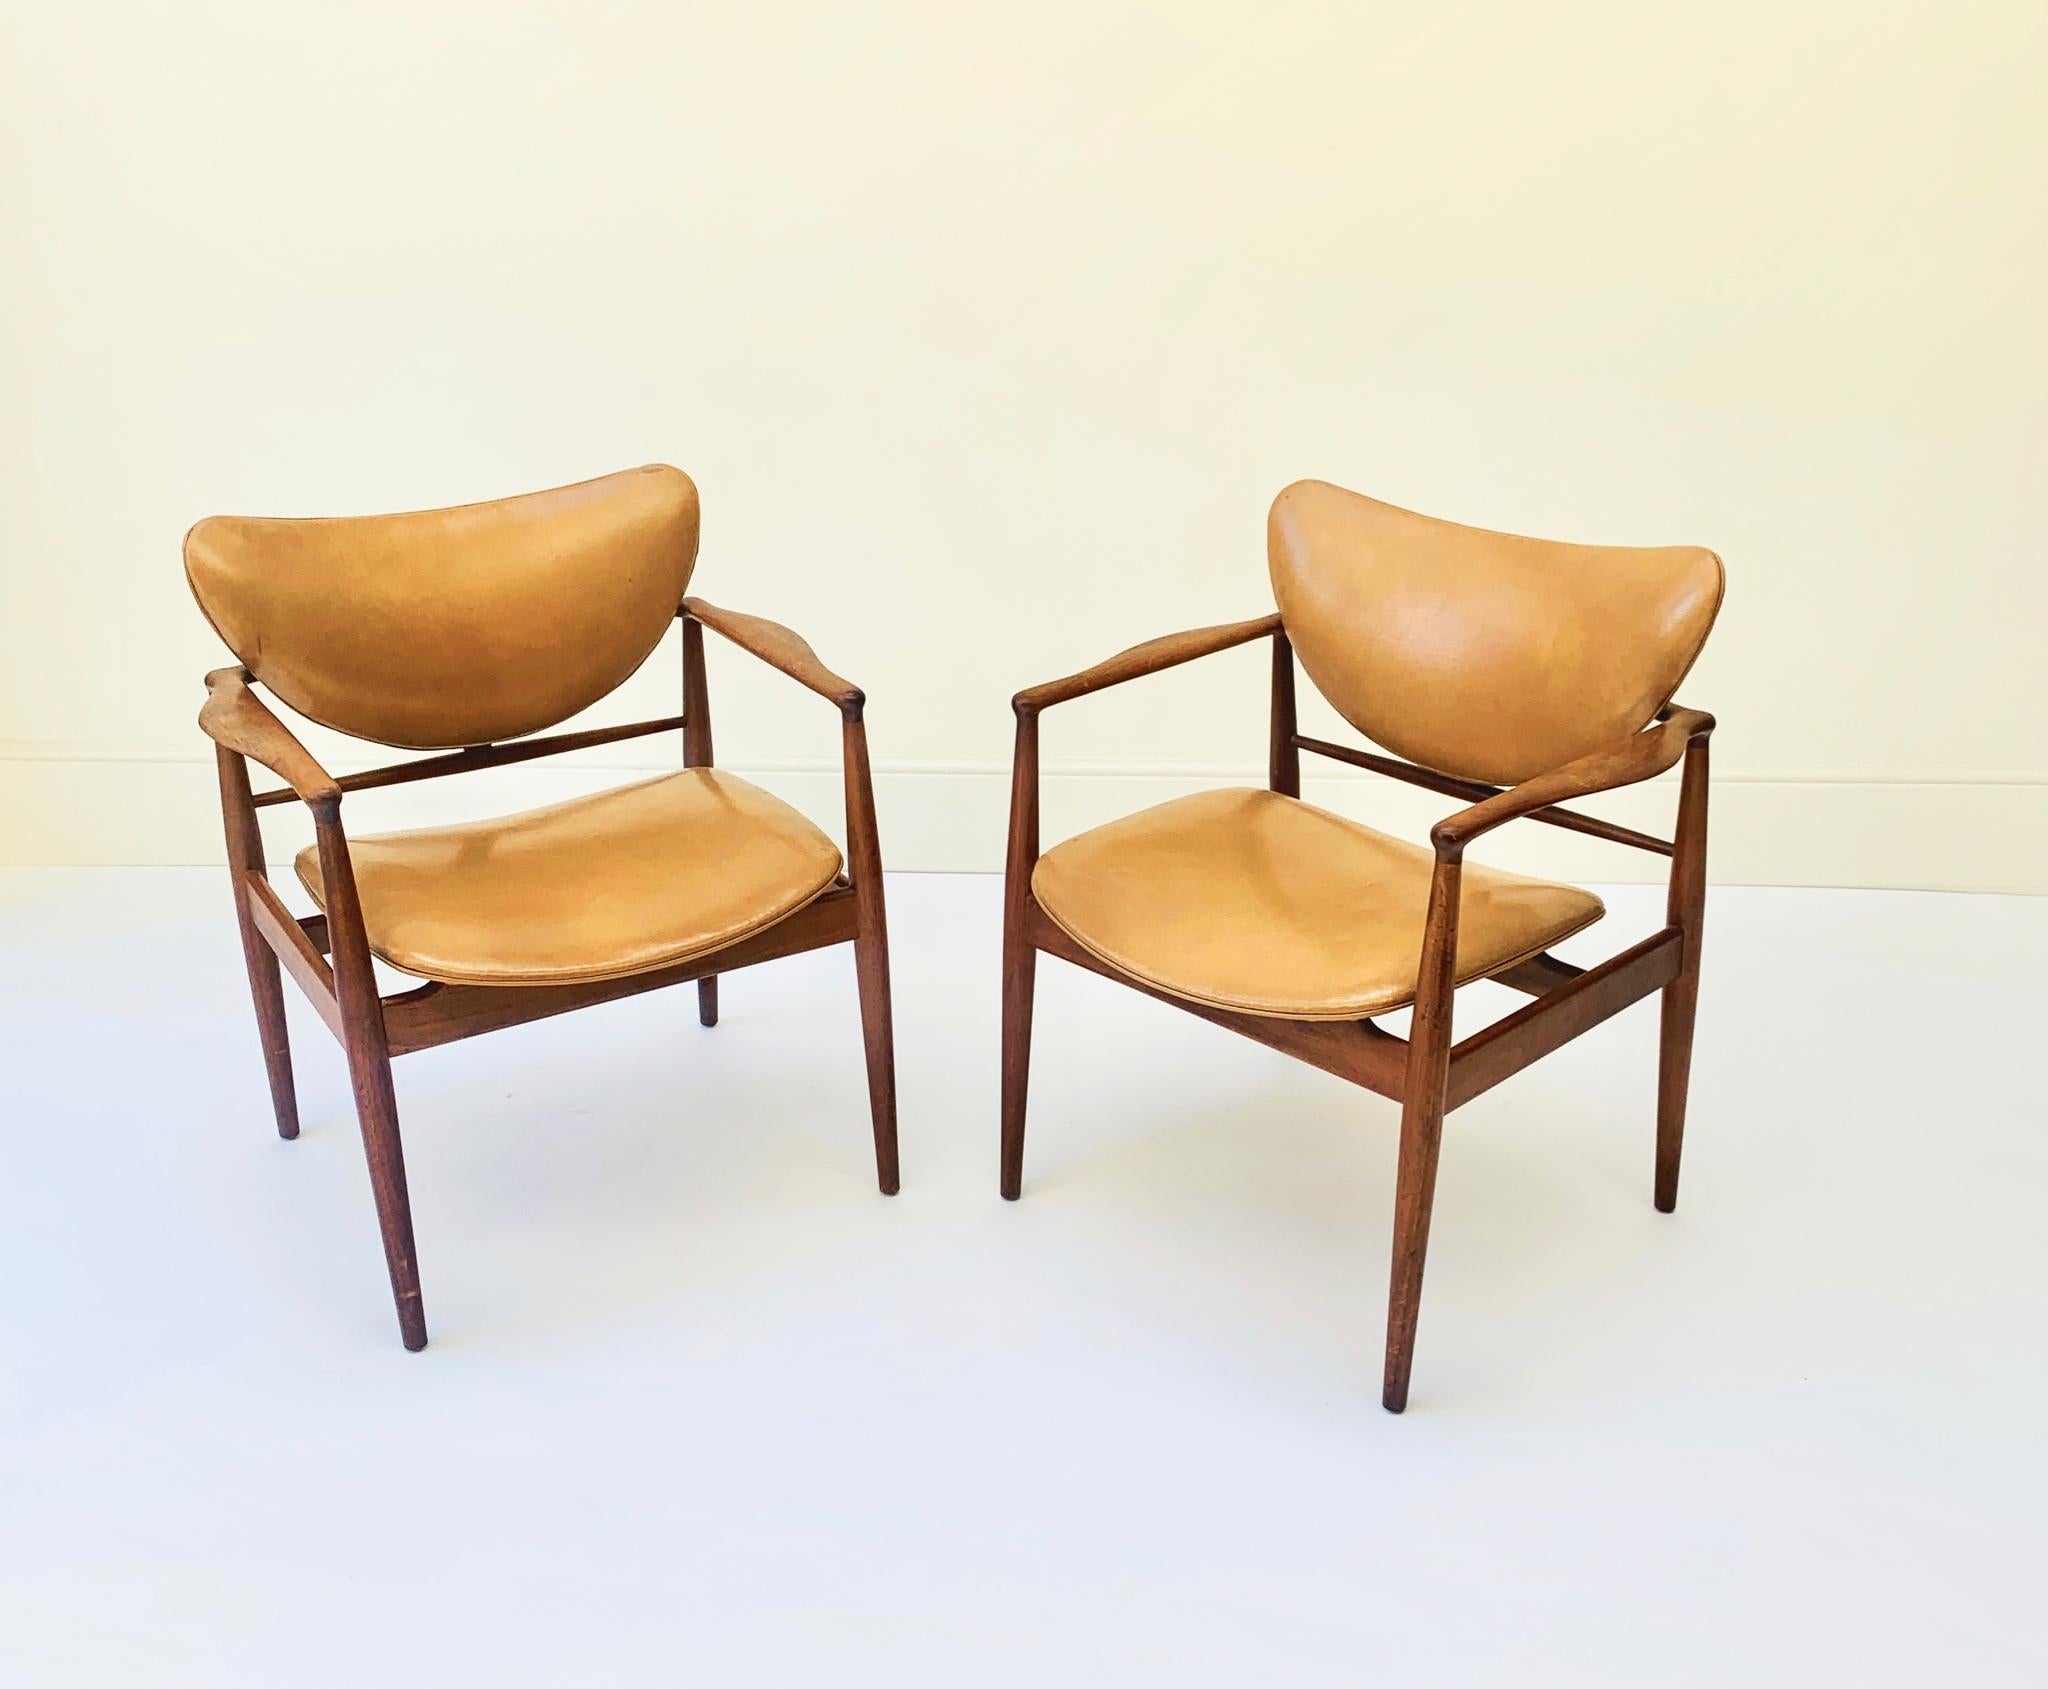 Pair of Finn Juhl model 48 armchairs, 1950s with teak frame and original naugahyde upholstery.